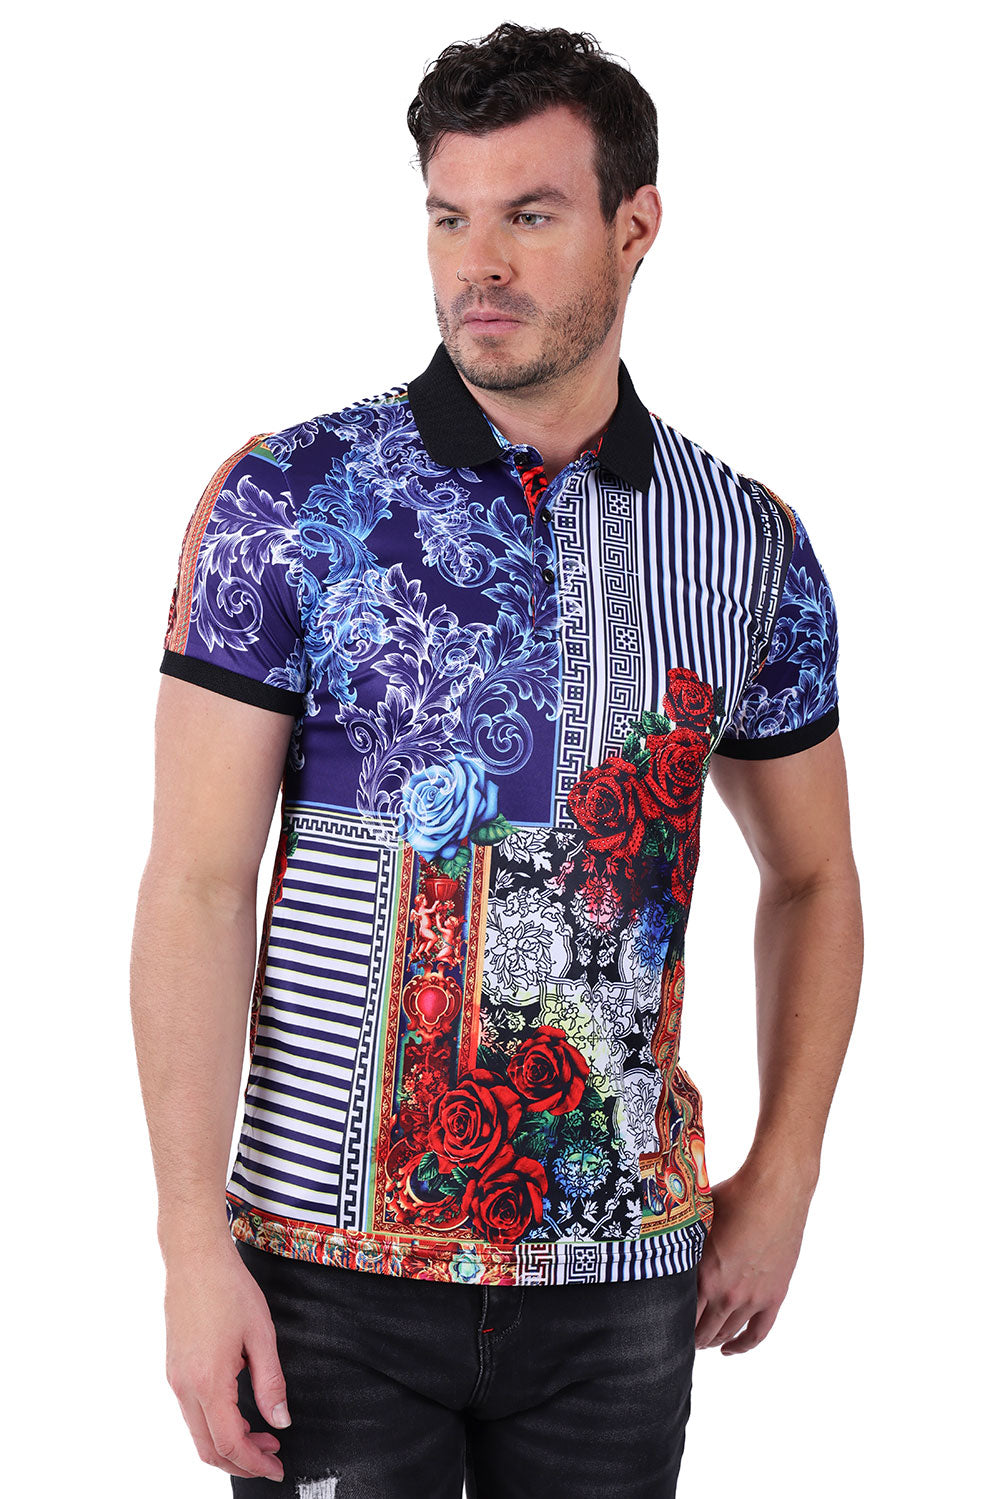 Barabas Men's Greek Key Rhinestone Floral Baroque Polo Shirt PSP2021